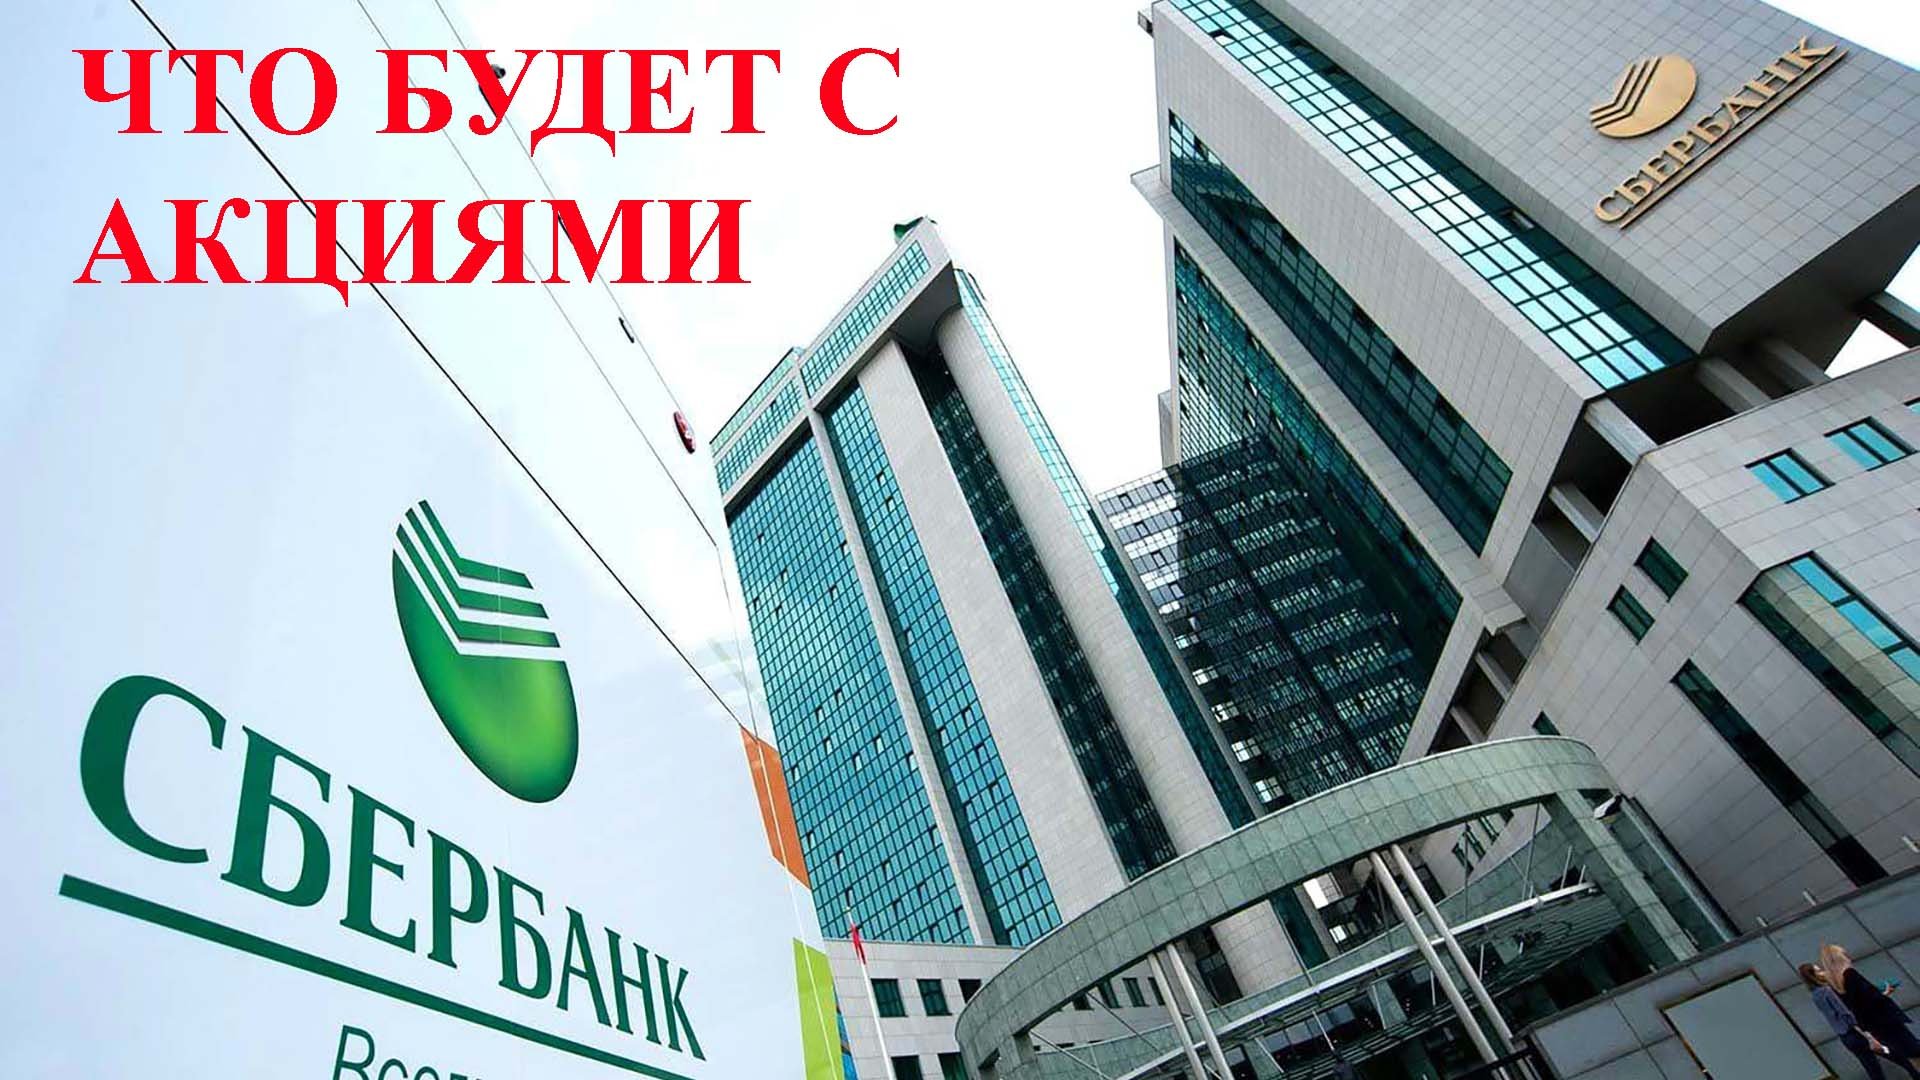 Sberbank public. Сбертян. ПАО Сбербанк. Сбербанк фото. Сберегательные банки.